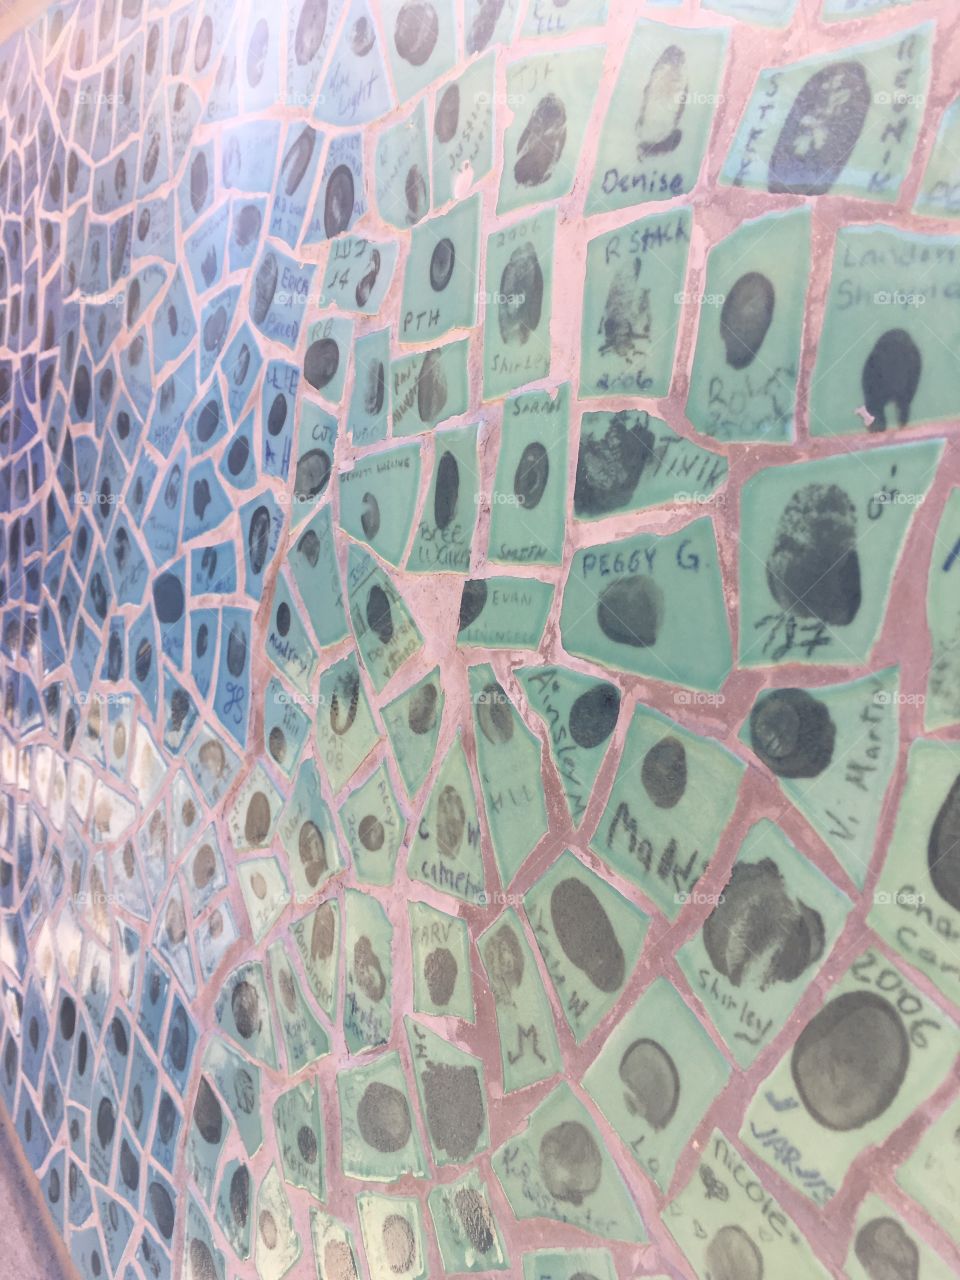 Fingerprints on ceramic mosaic.